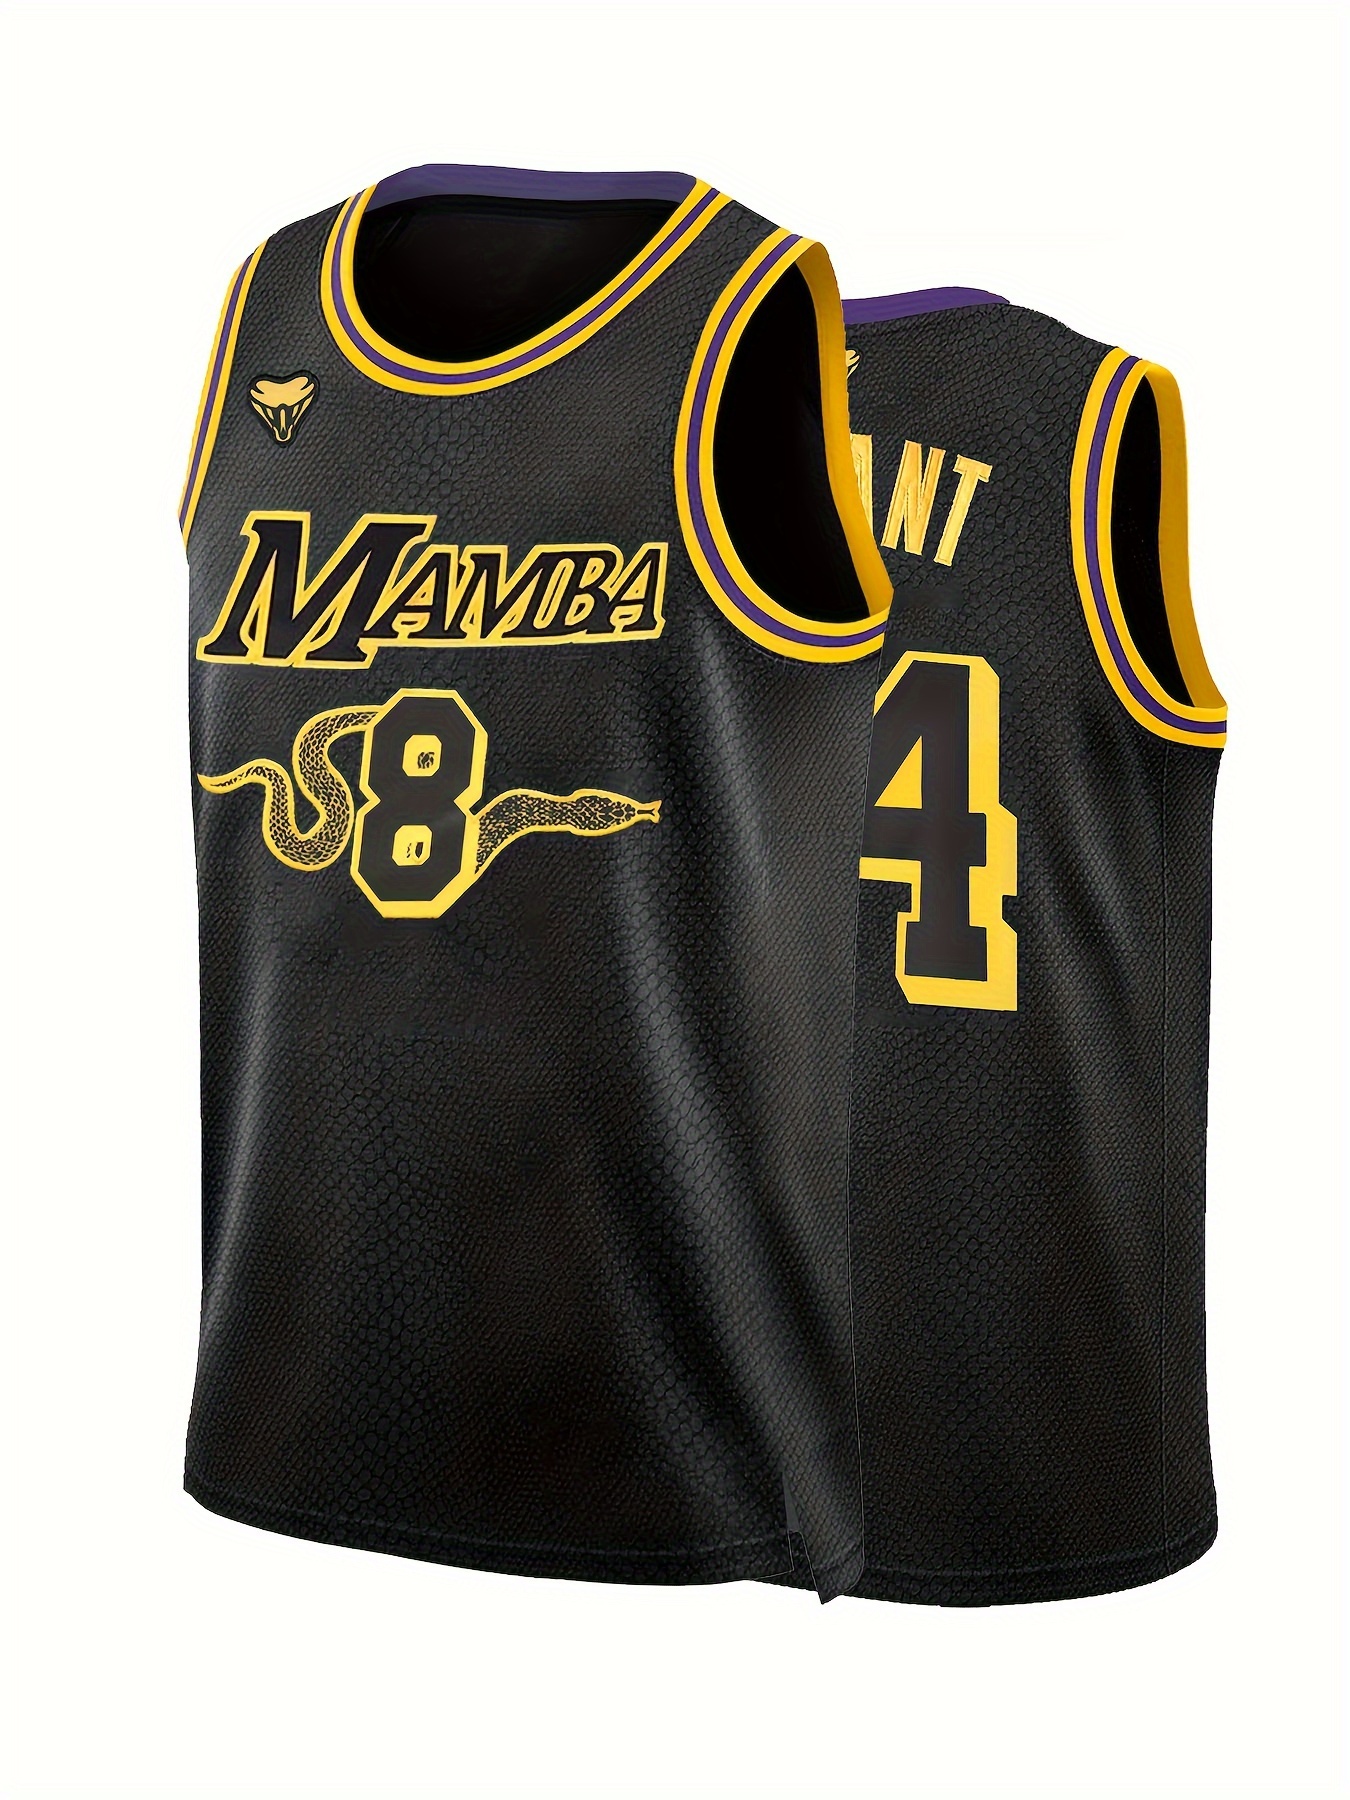 Men's Kobe Bryant Jersey - S-XL - Black - Front #8 - Back #24 - Lakers